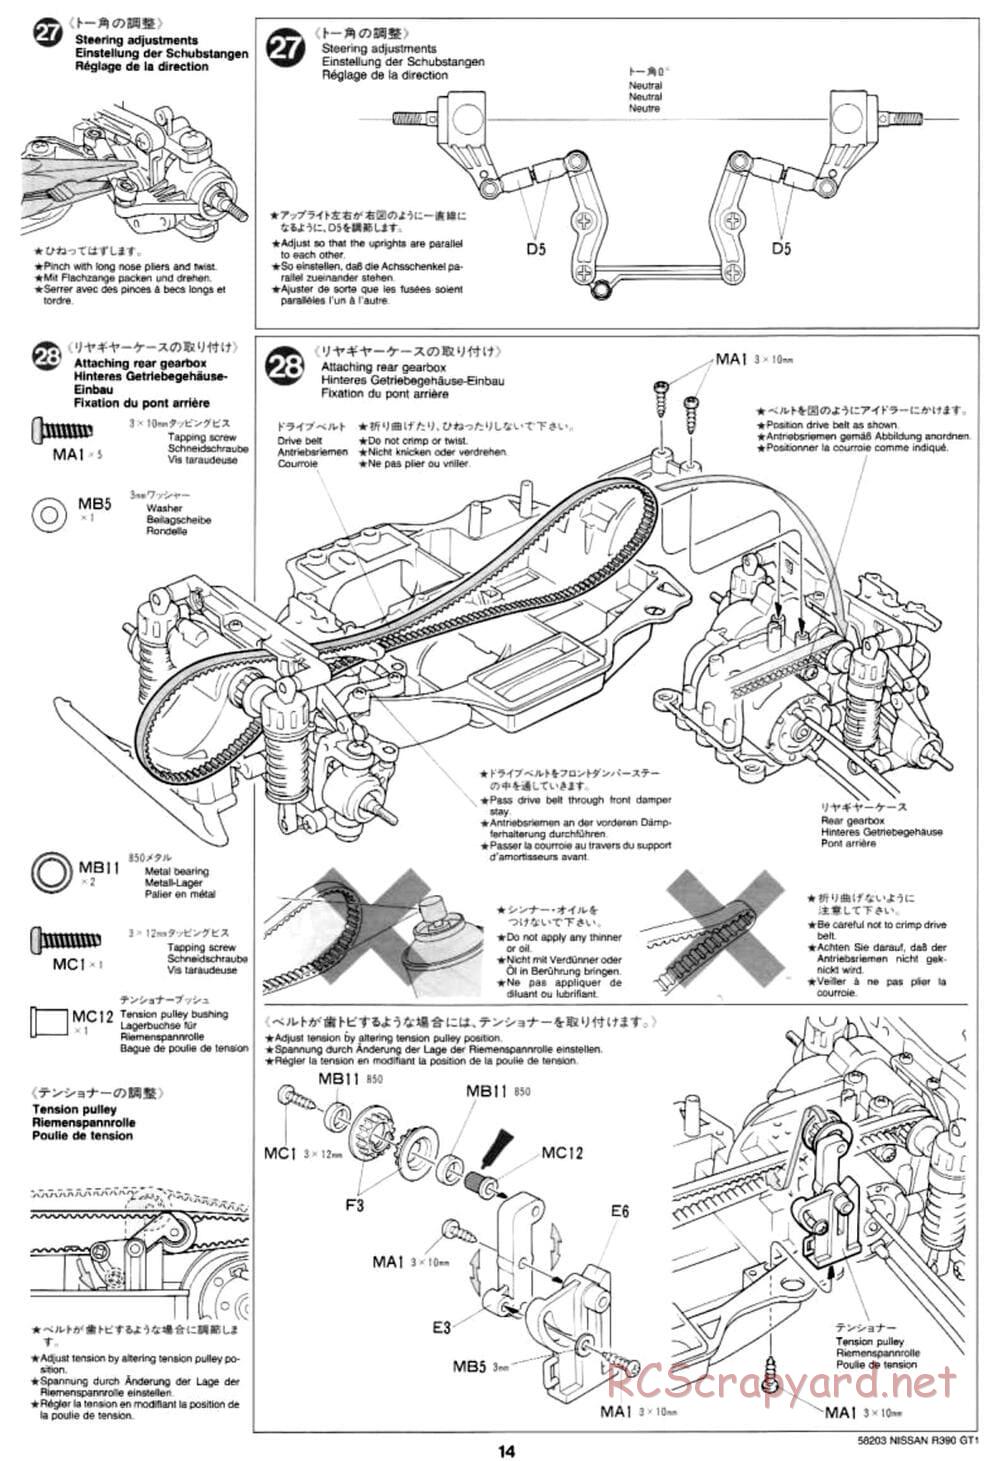 Tamiya - Nissan R390 GT1 - TA-03R Chassis - Manual - Page 14